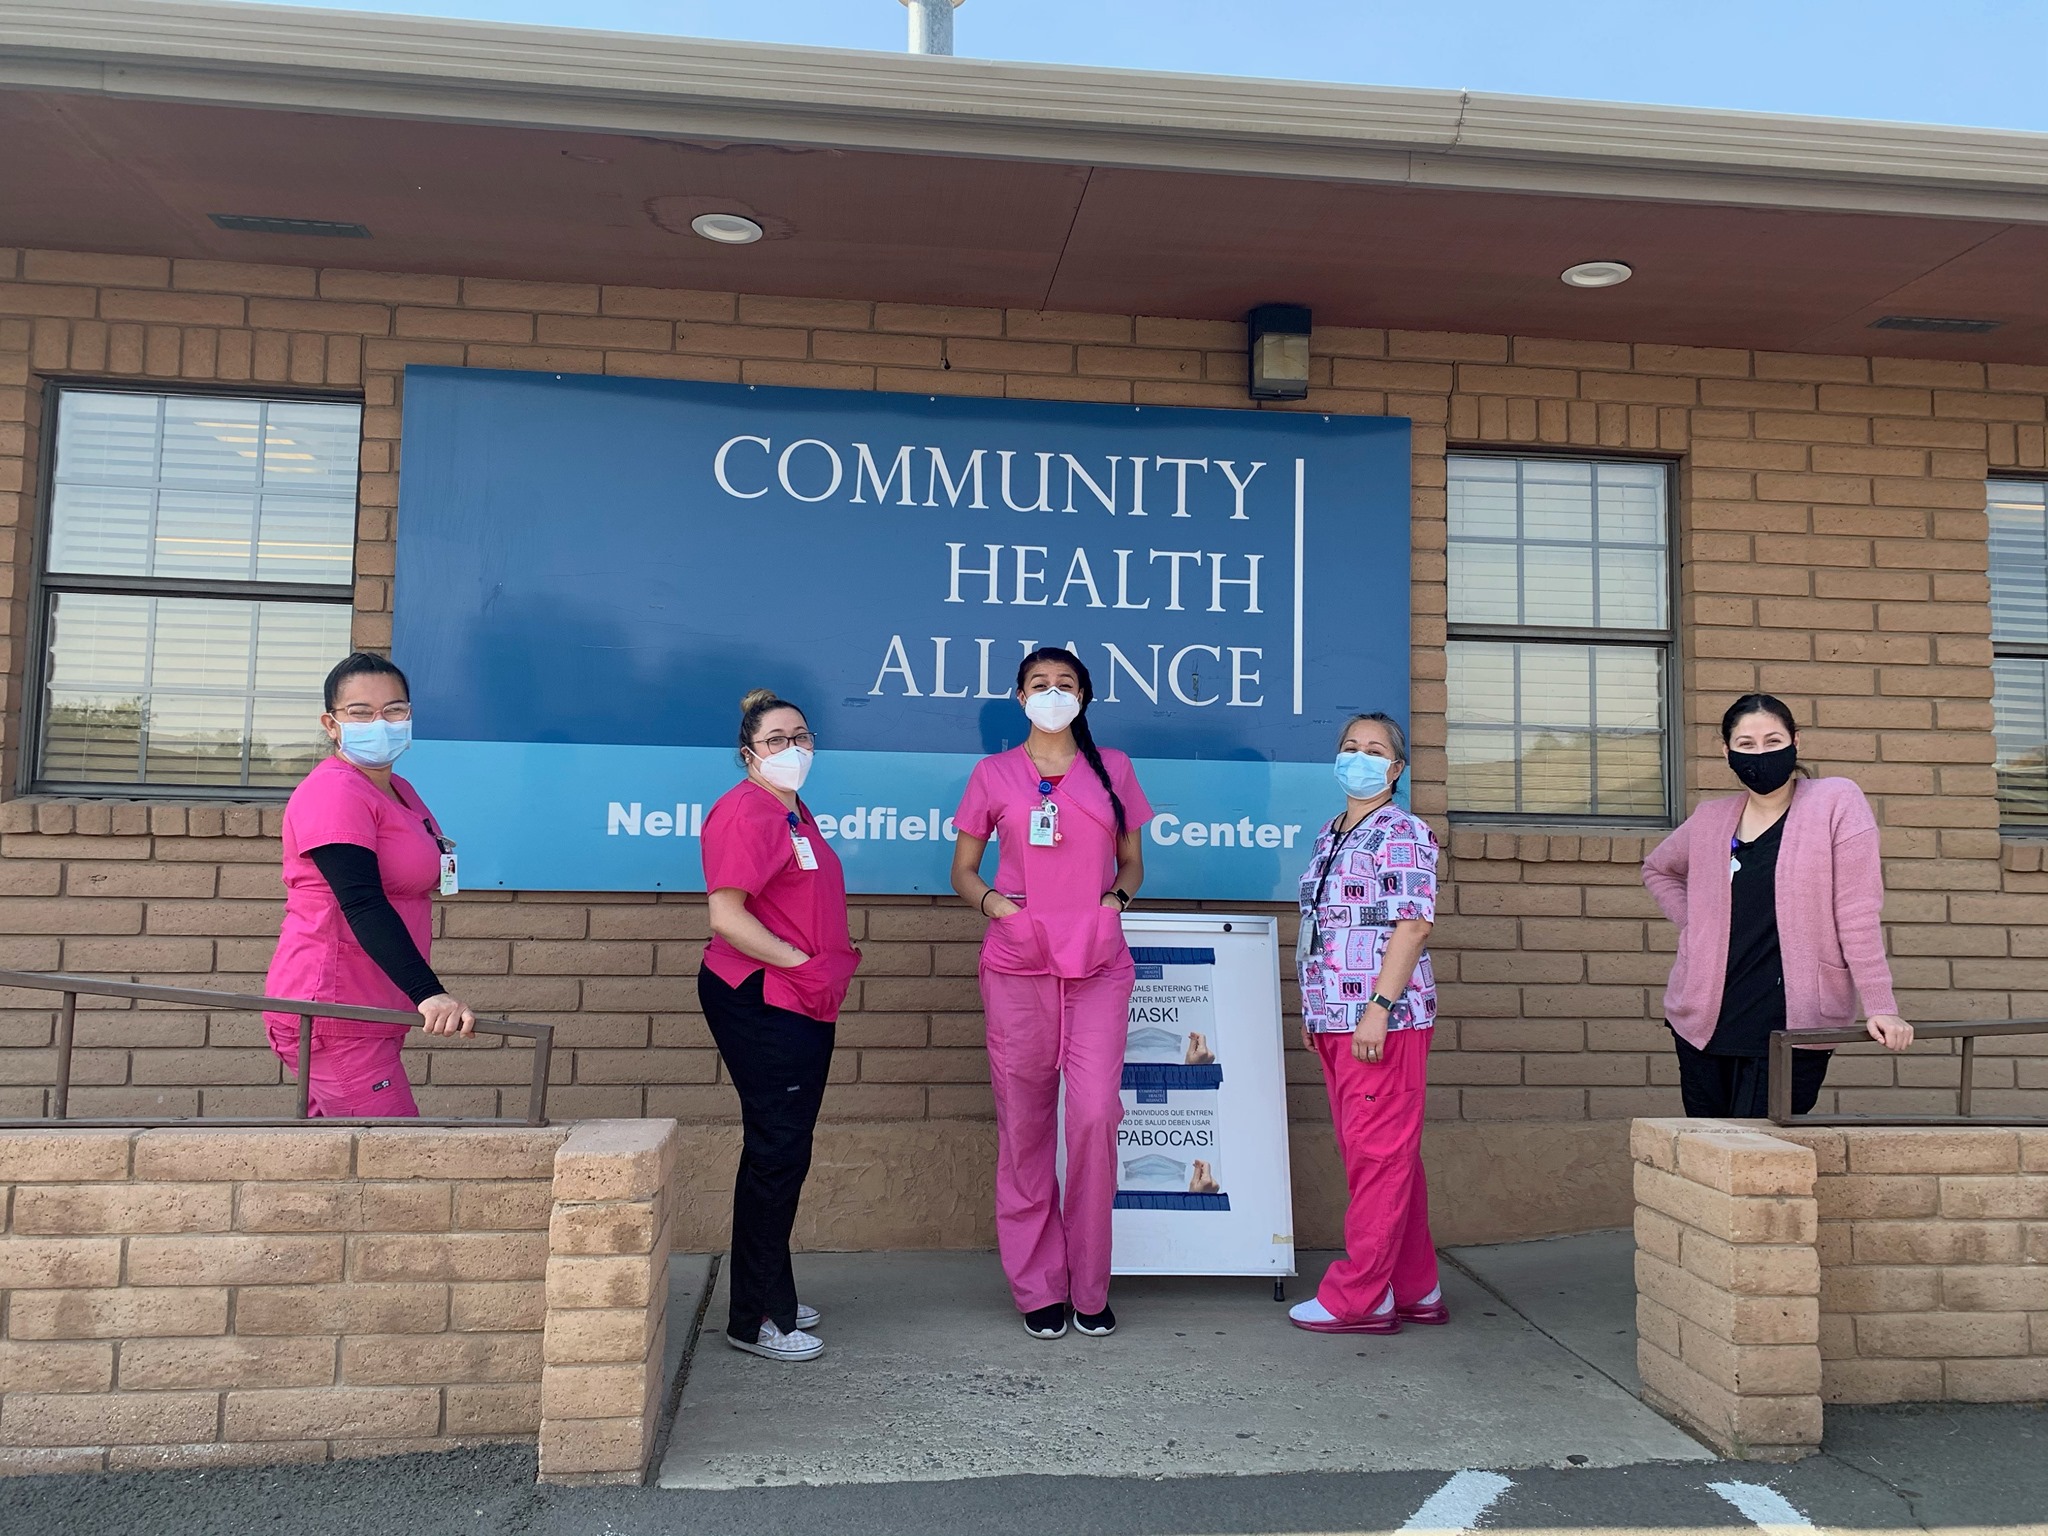 Community Health Alliance WIC - Nell J. Redfield Health Center, Neil Road